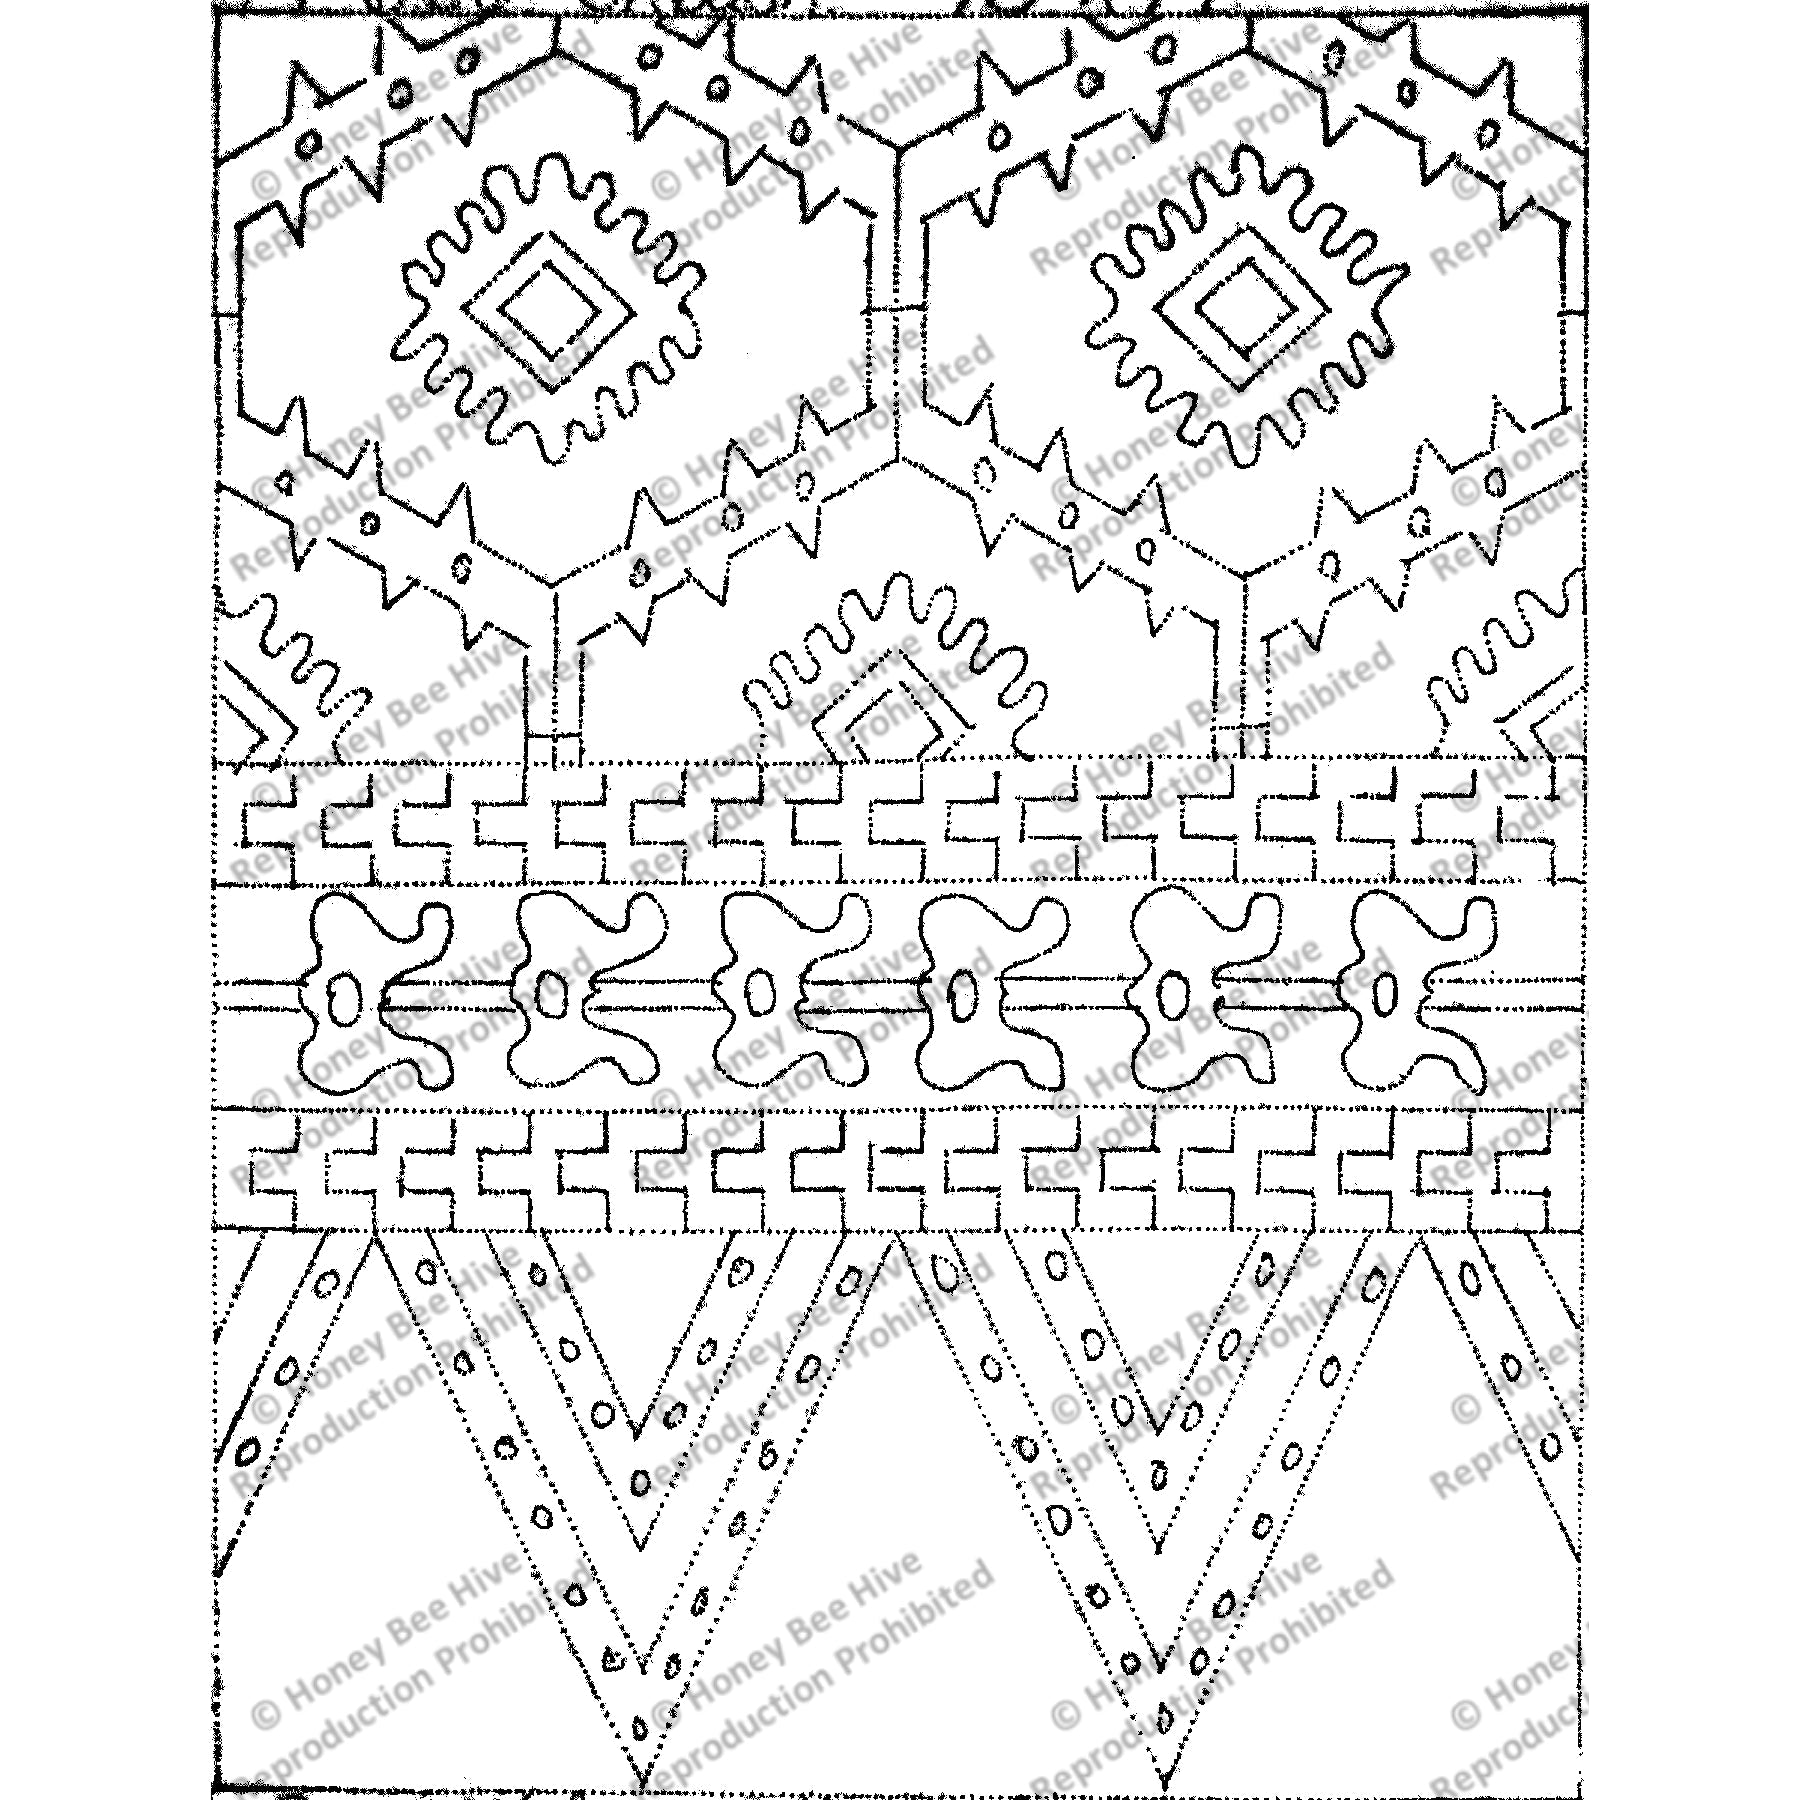 Okbash, rug hooking pattern